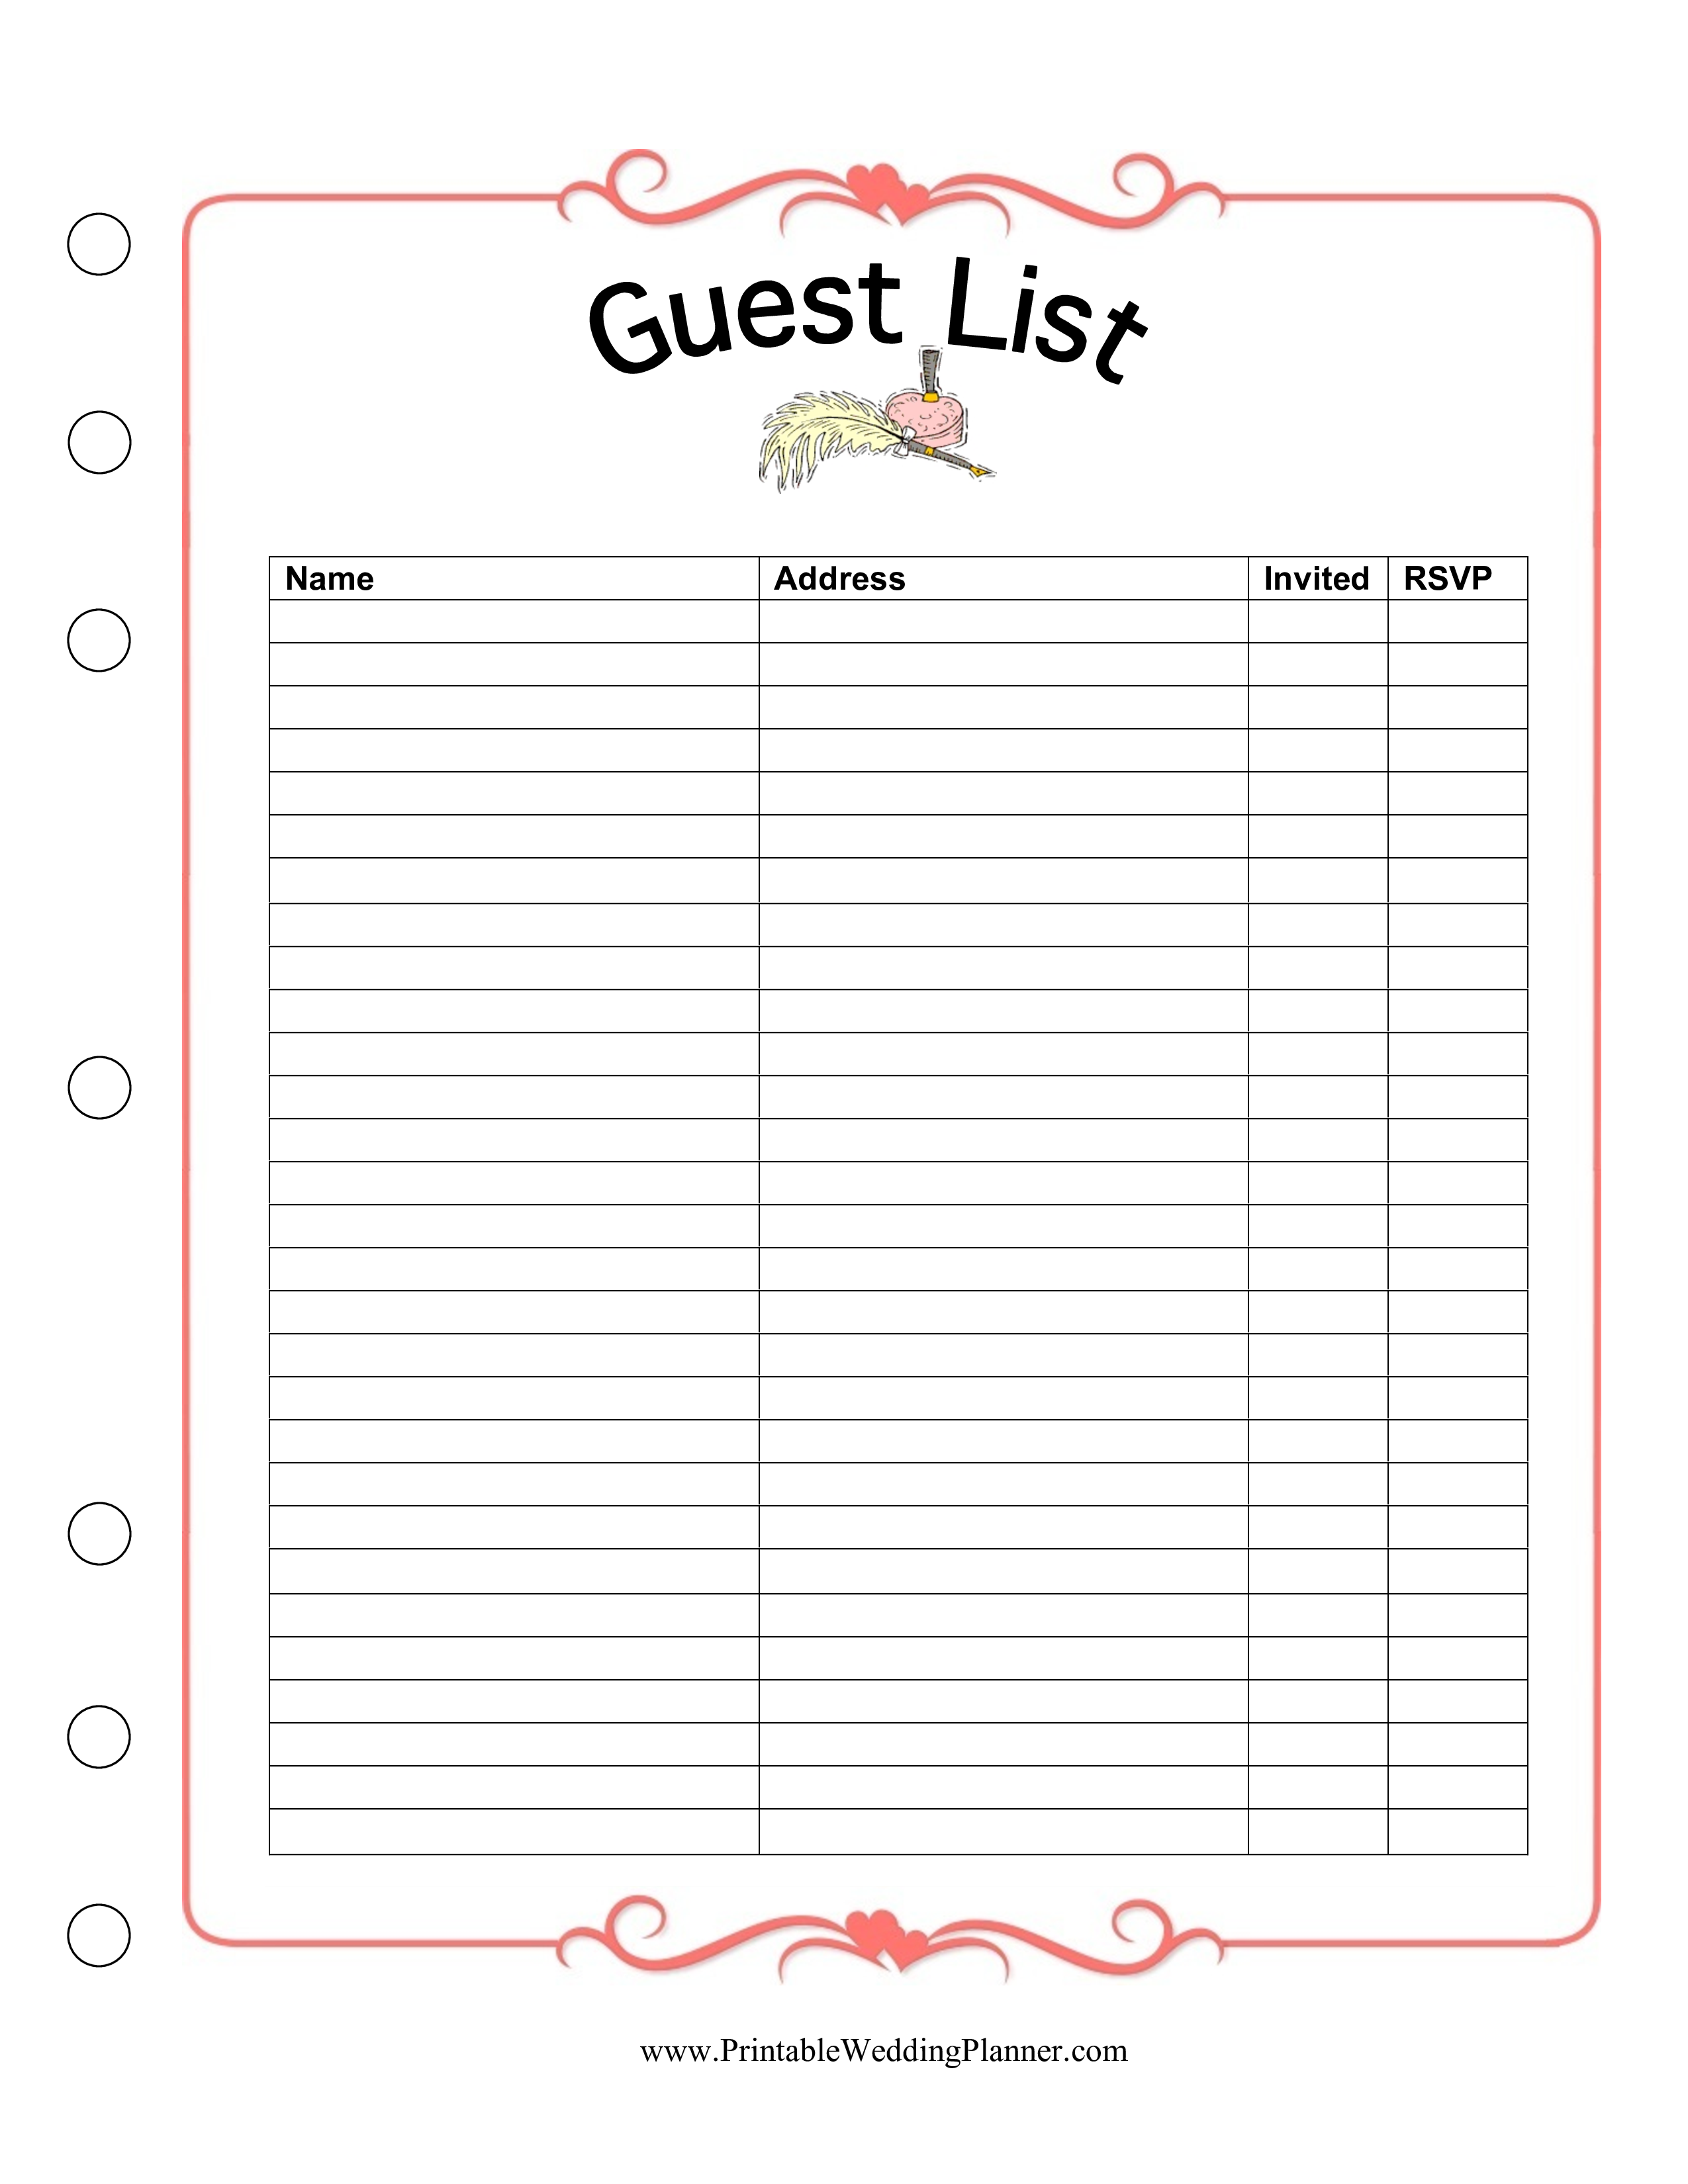 Wedding Guest List Spreadsheet Templates at allbusinesstemplates com